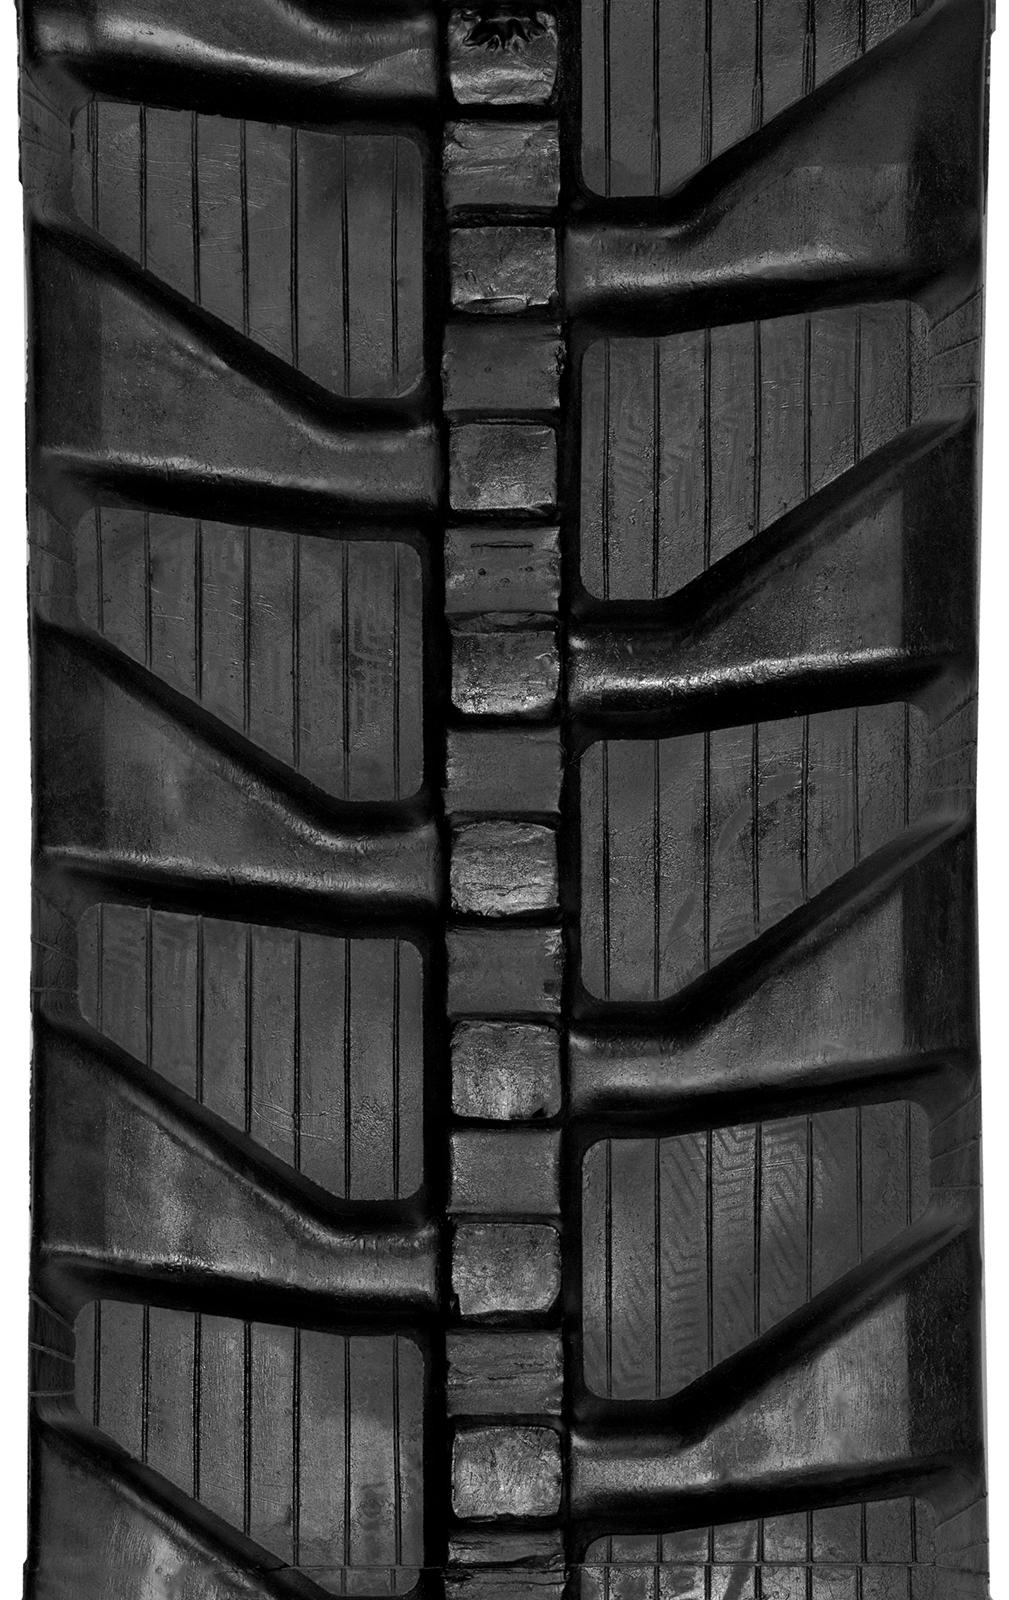 set of 2 9" heavy duty rubber track (230x48x68)